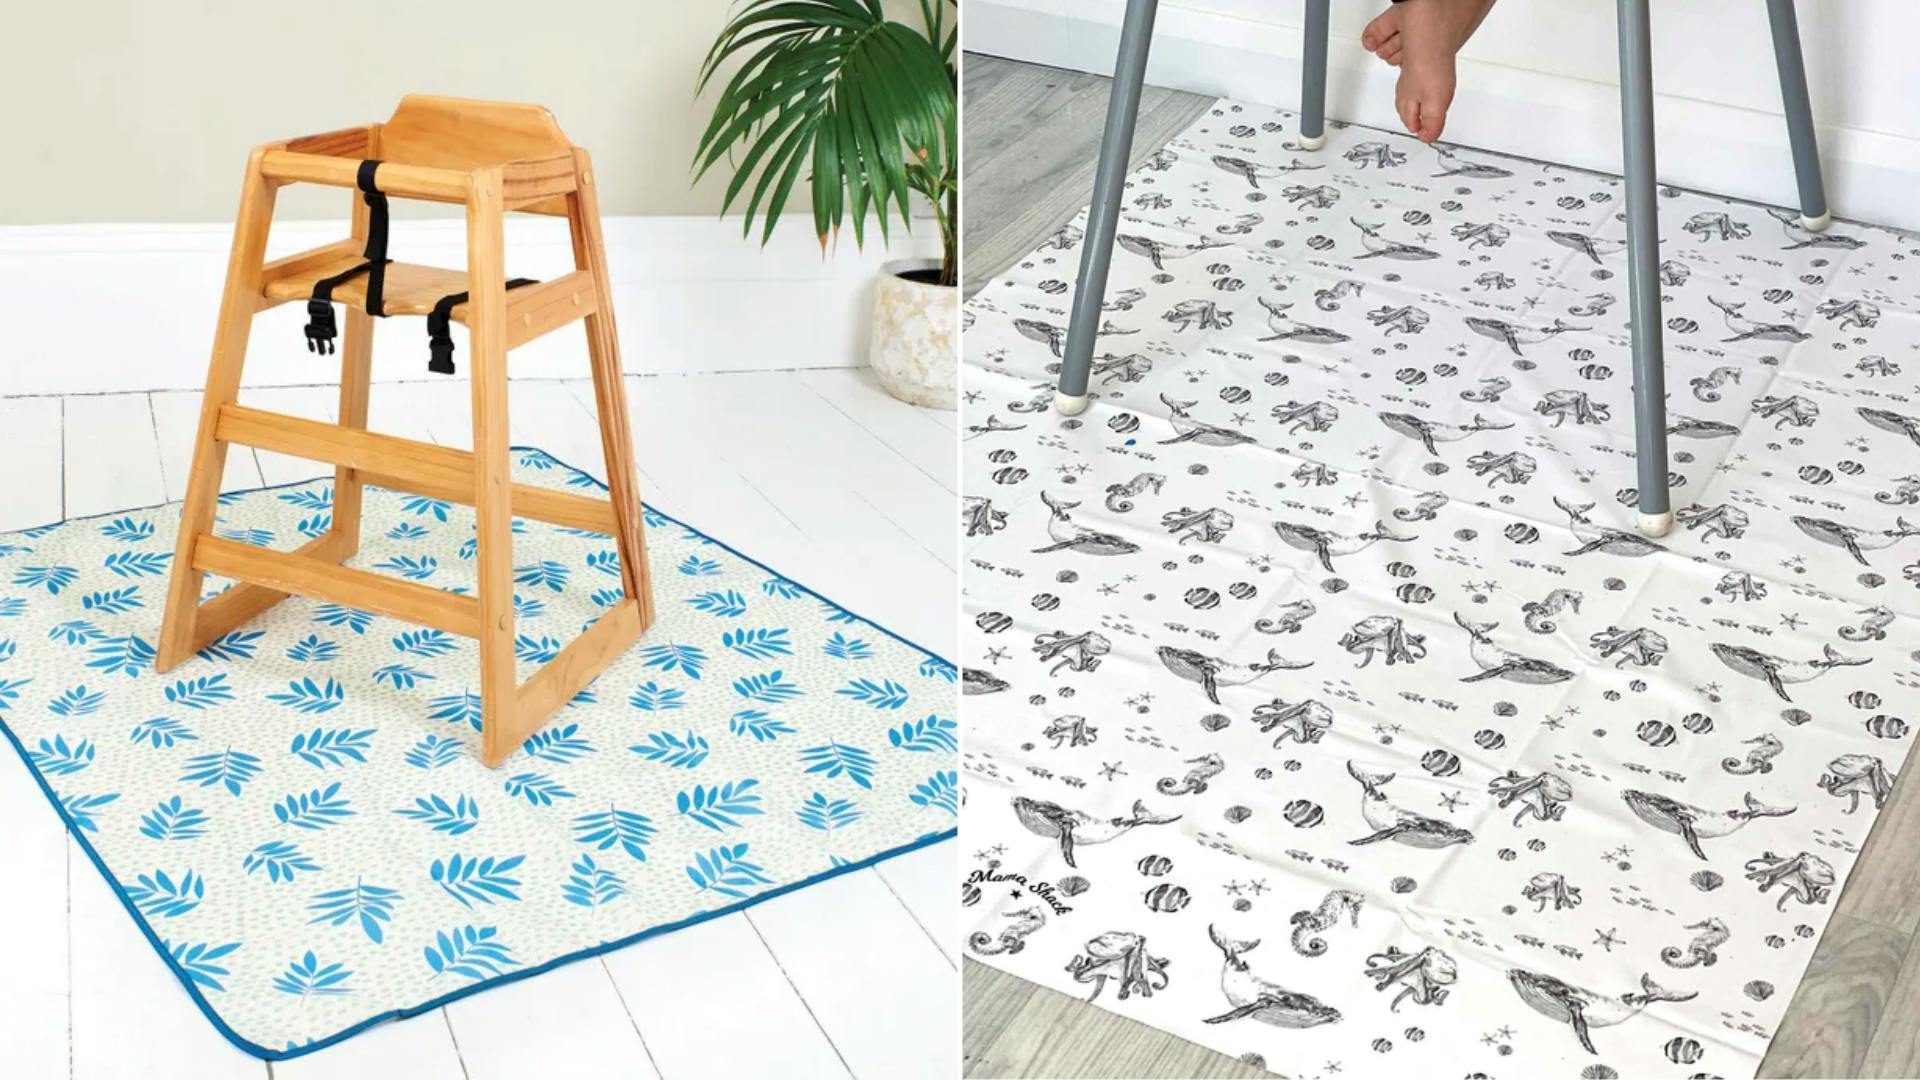 Highchair Splash Mat Baby,Waterproof Anti Slip Feeding Splat Mat Floor Table Protector Cover 140cm*140cm